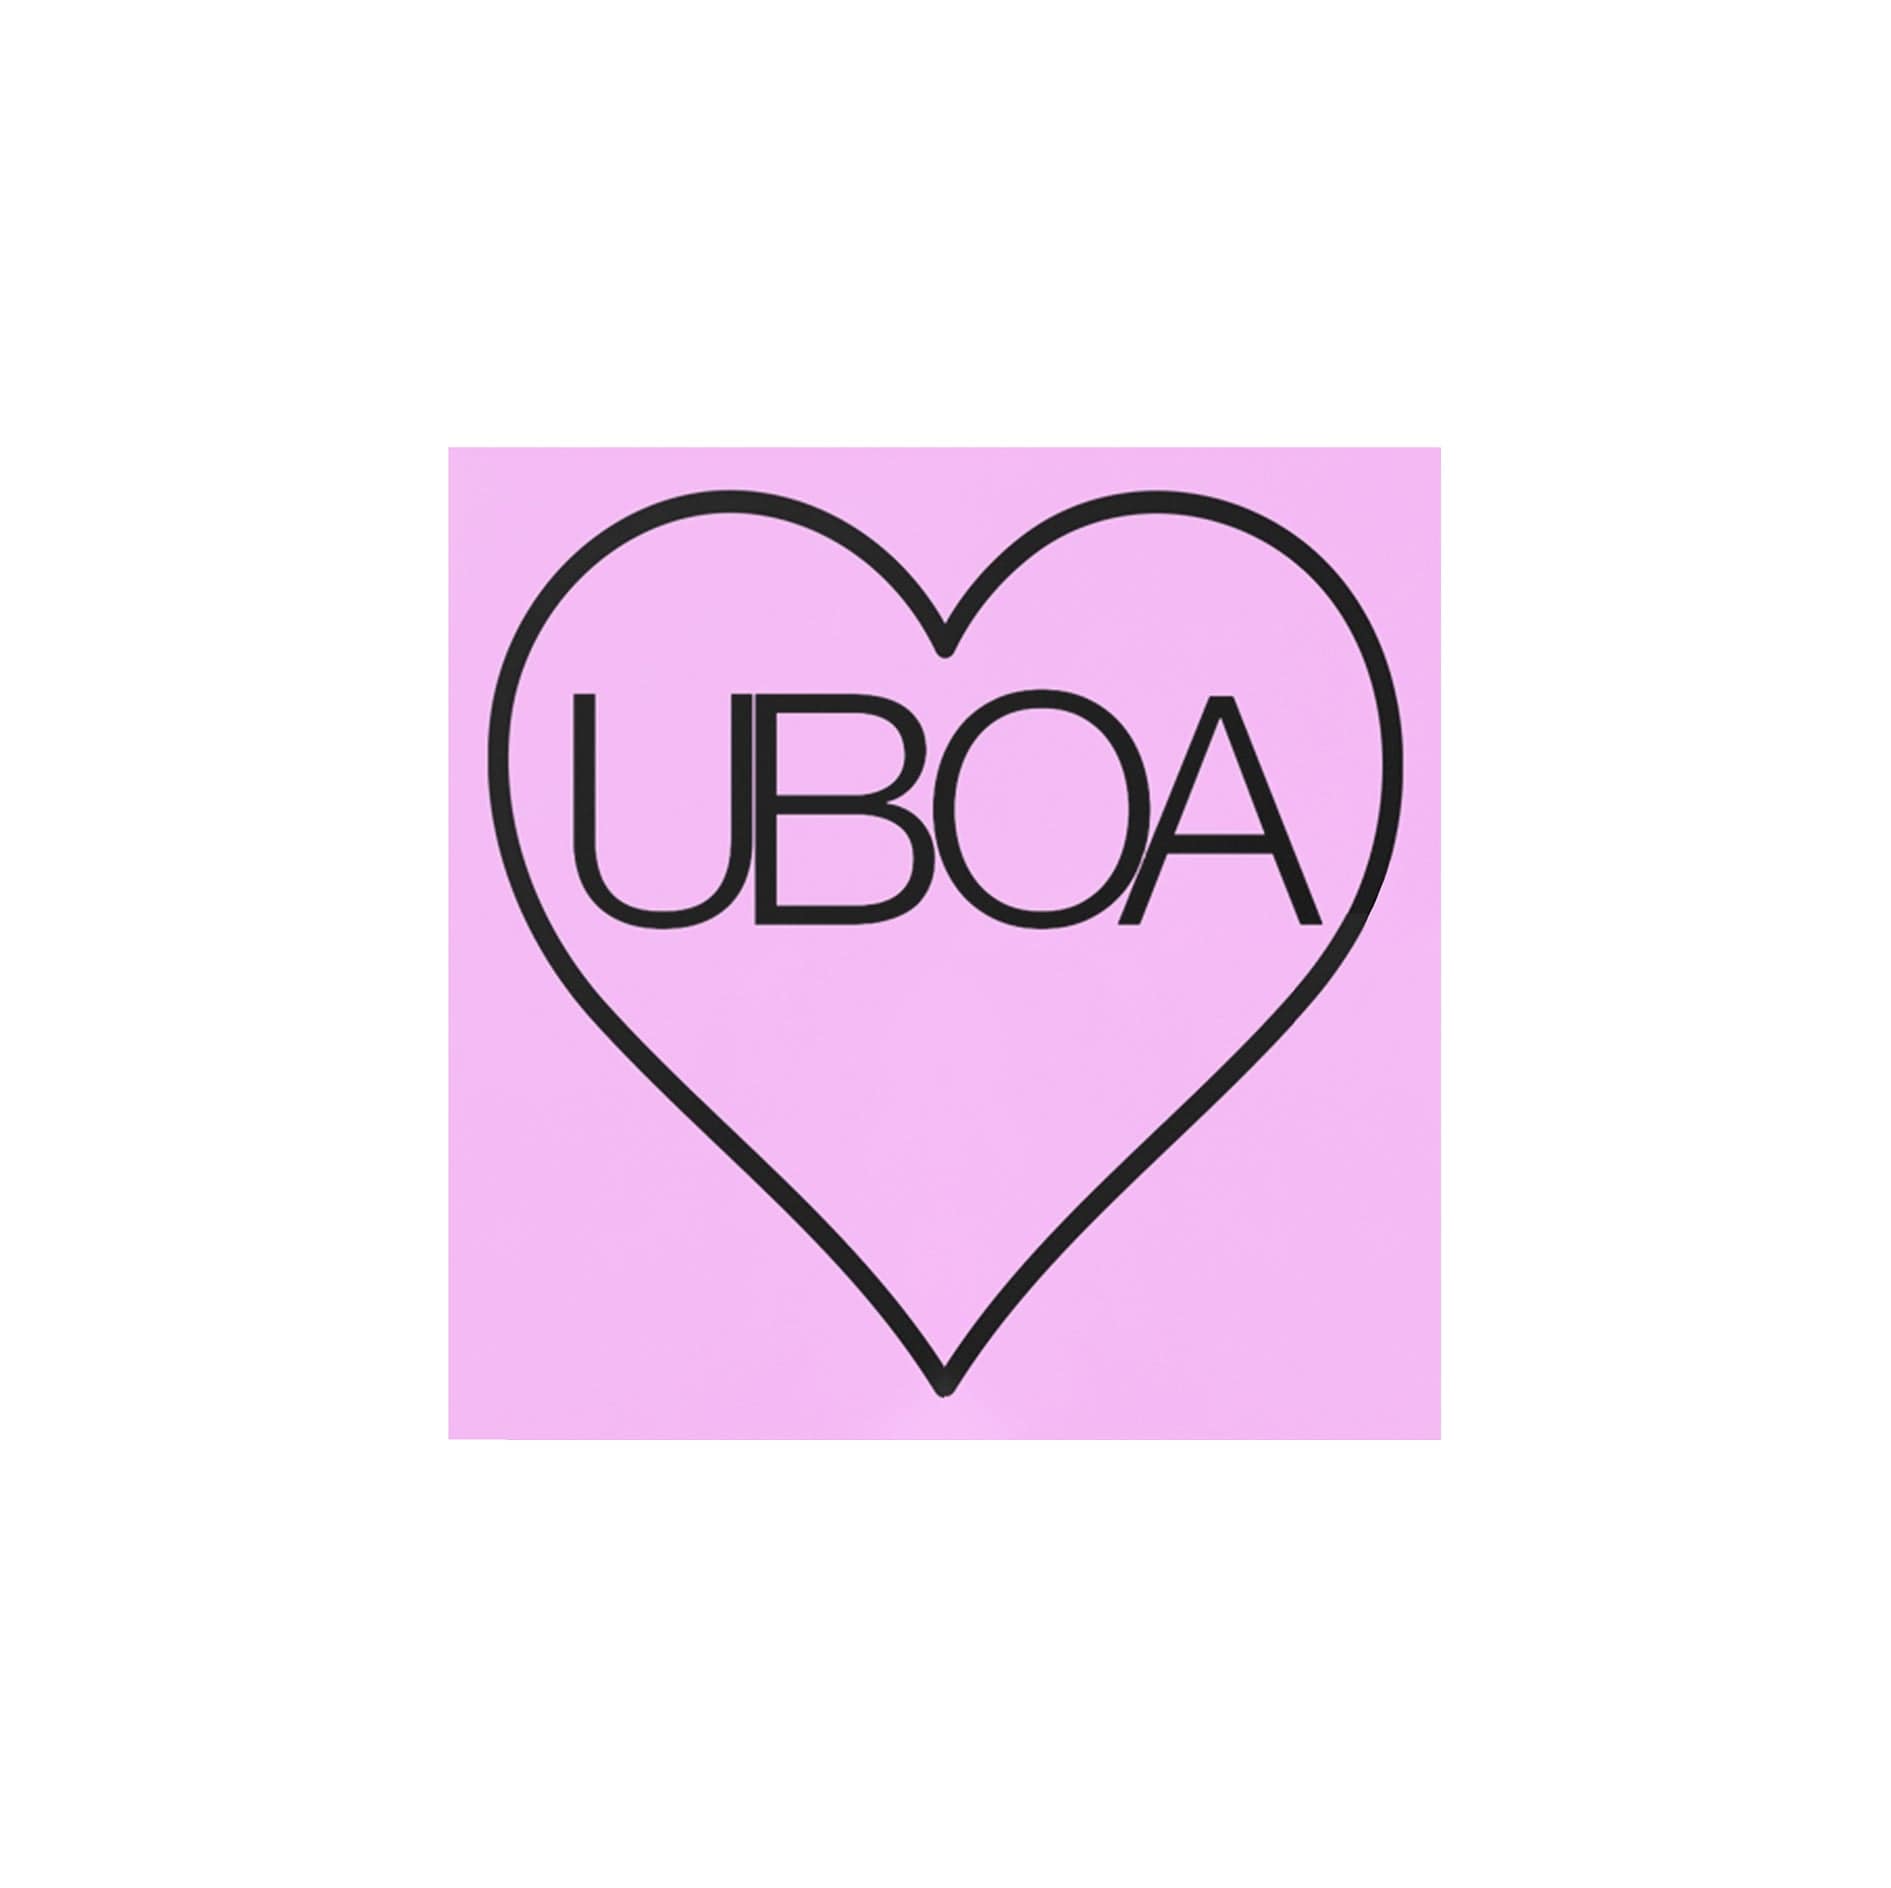 The Flenser Apparel Uboa "Heart" Sticker